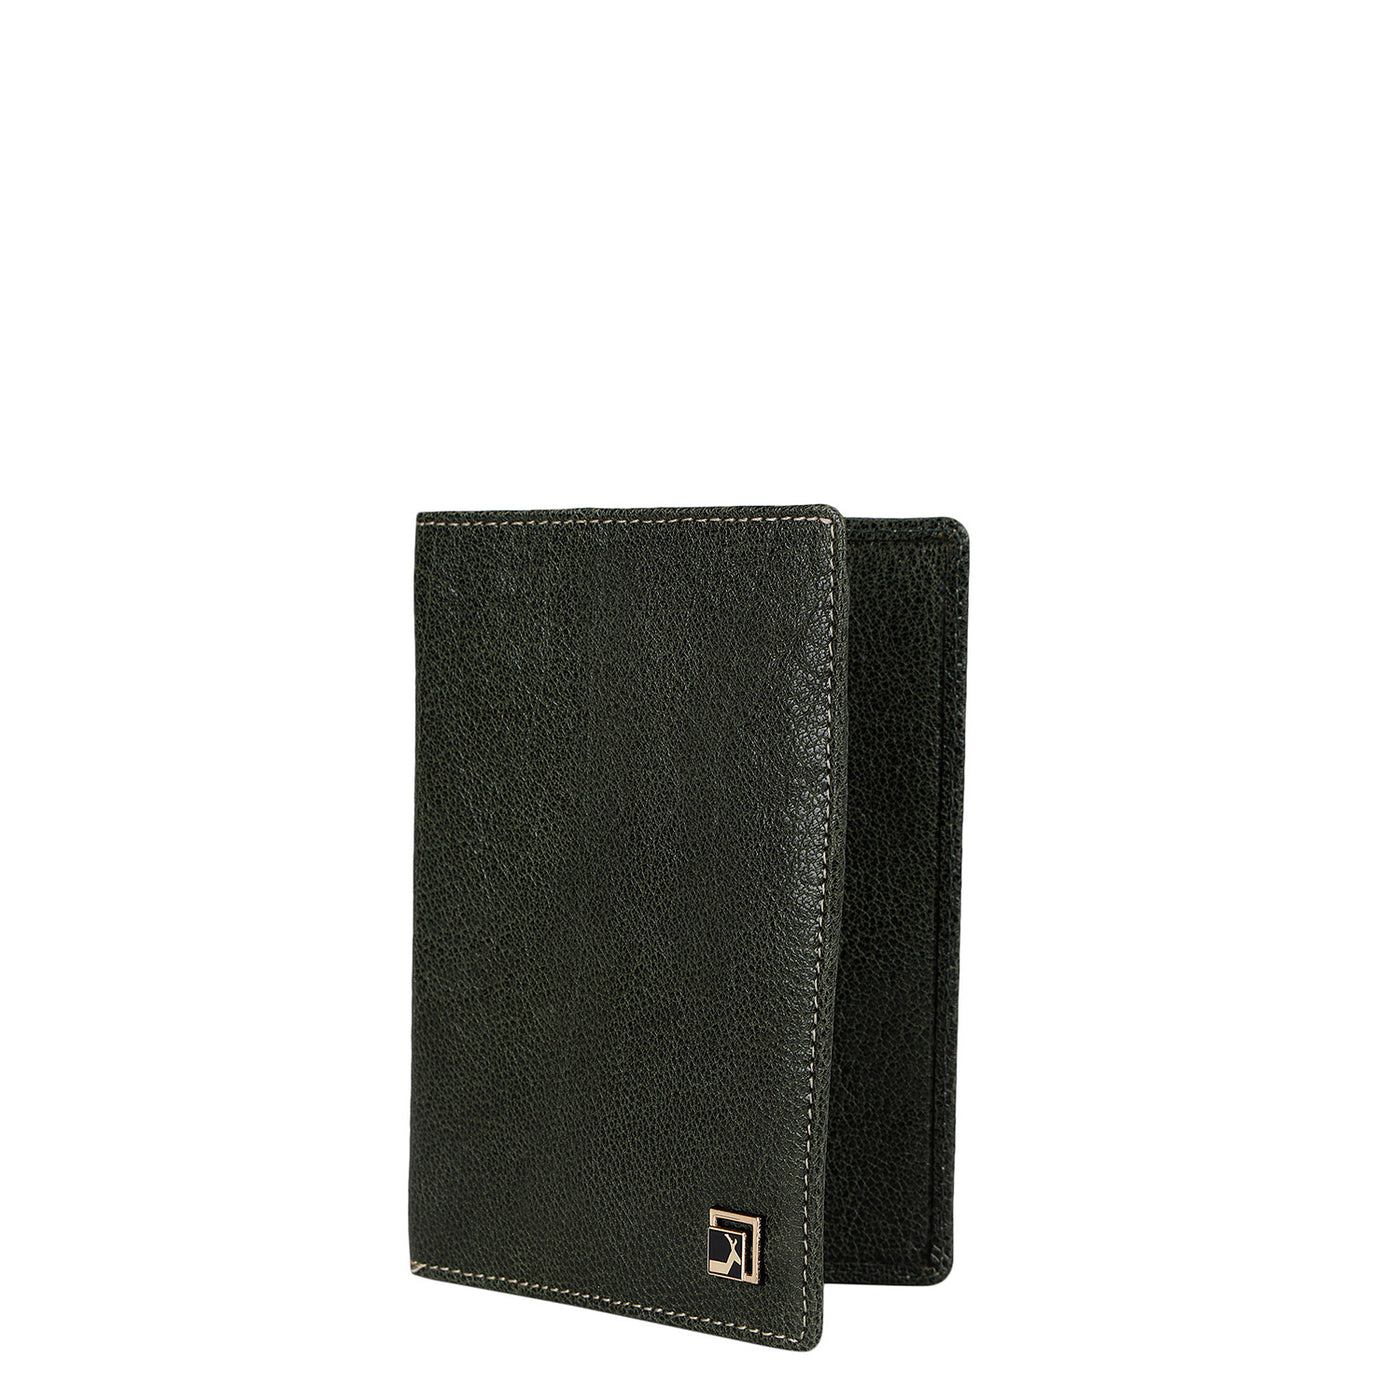 Elephant Pattern Leather Passport Case - Green